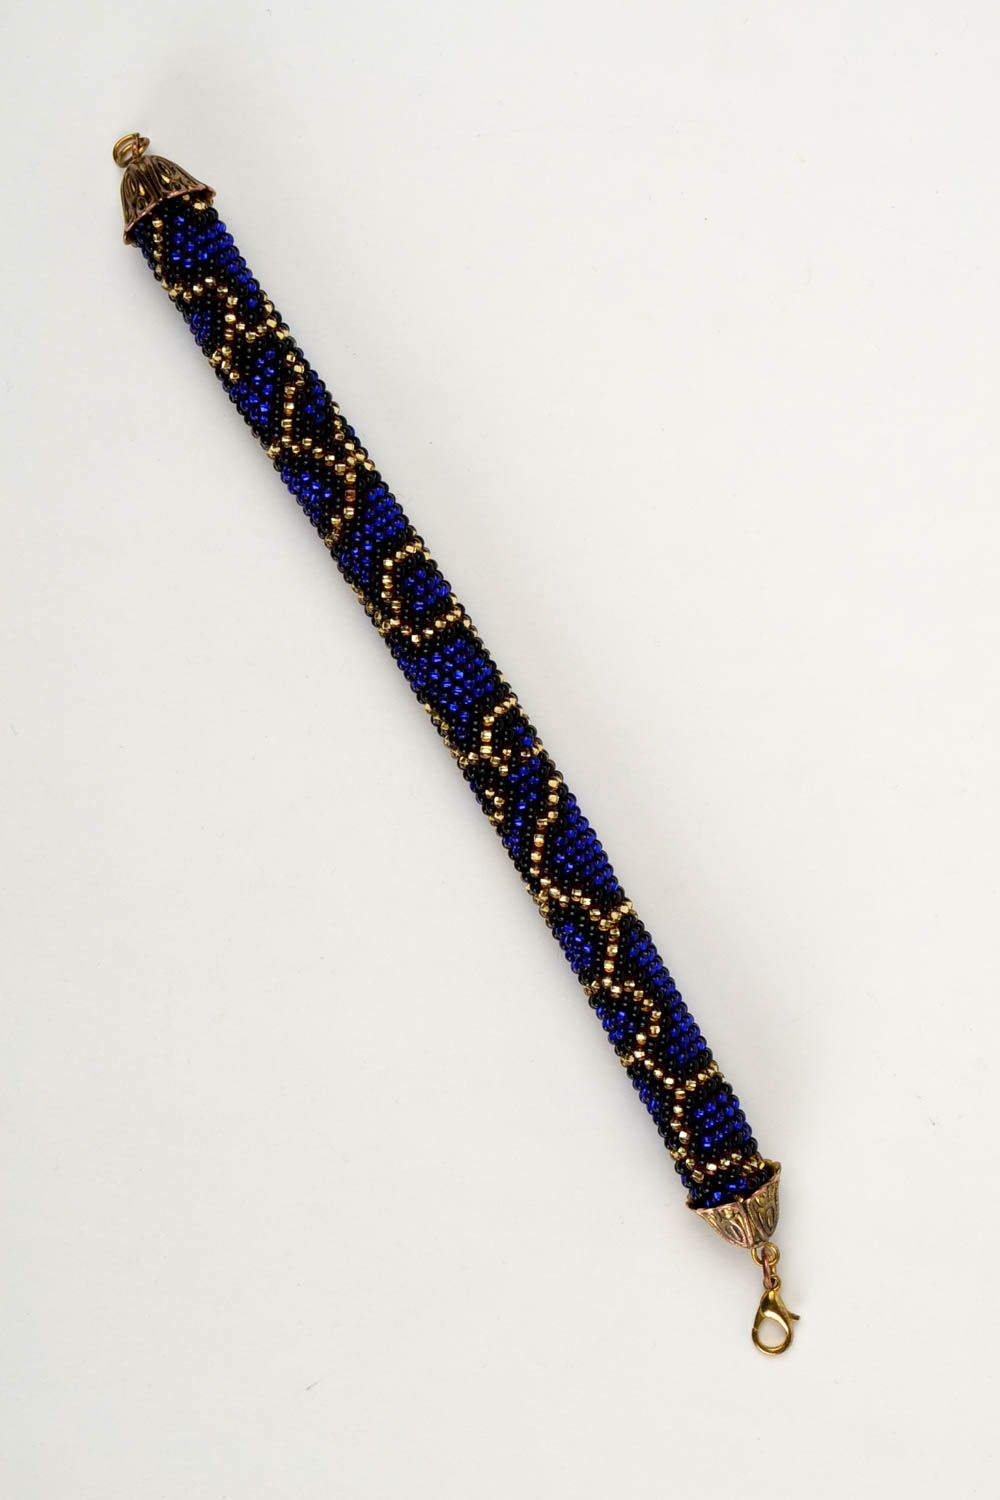 Handmade beaded cord bracelet stylish unusual bracelet wrist accessory photo 4